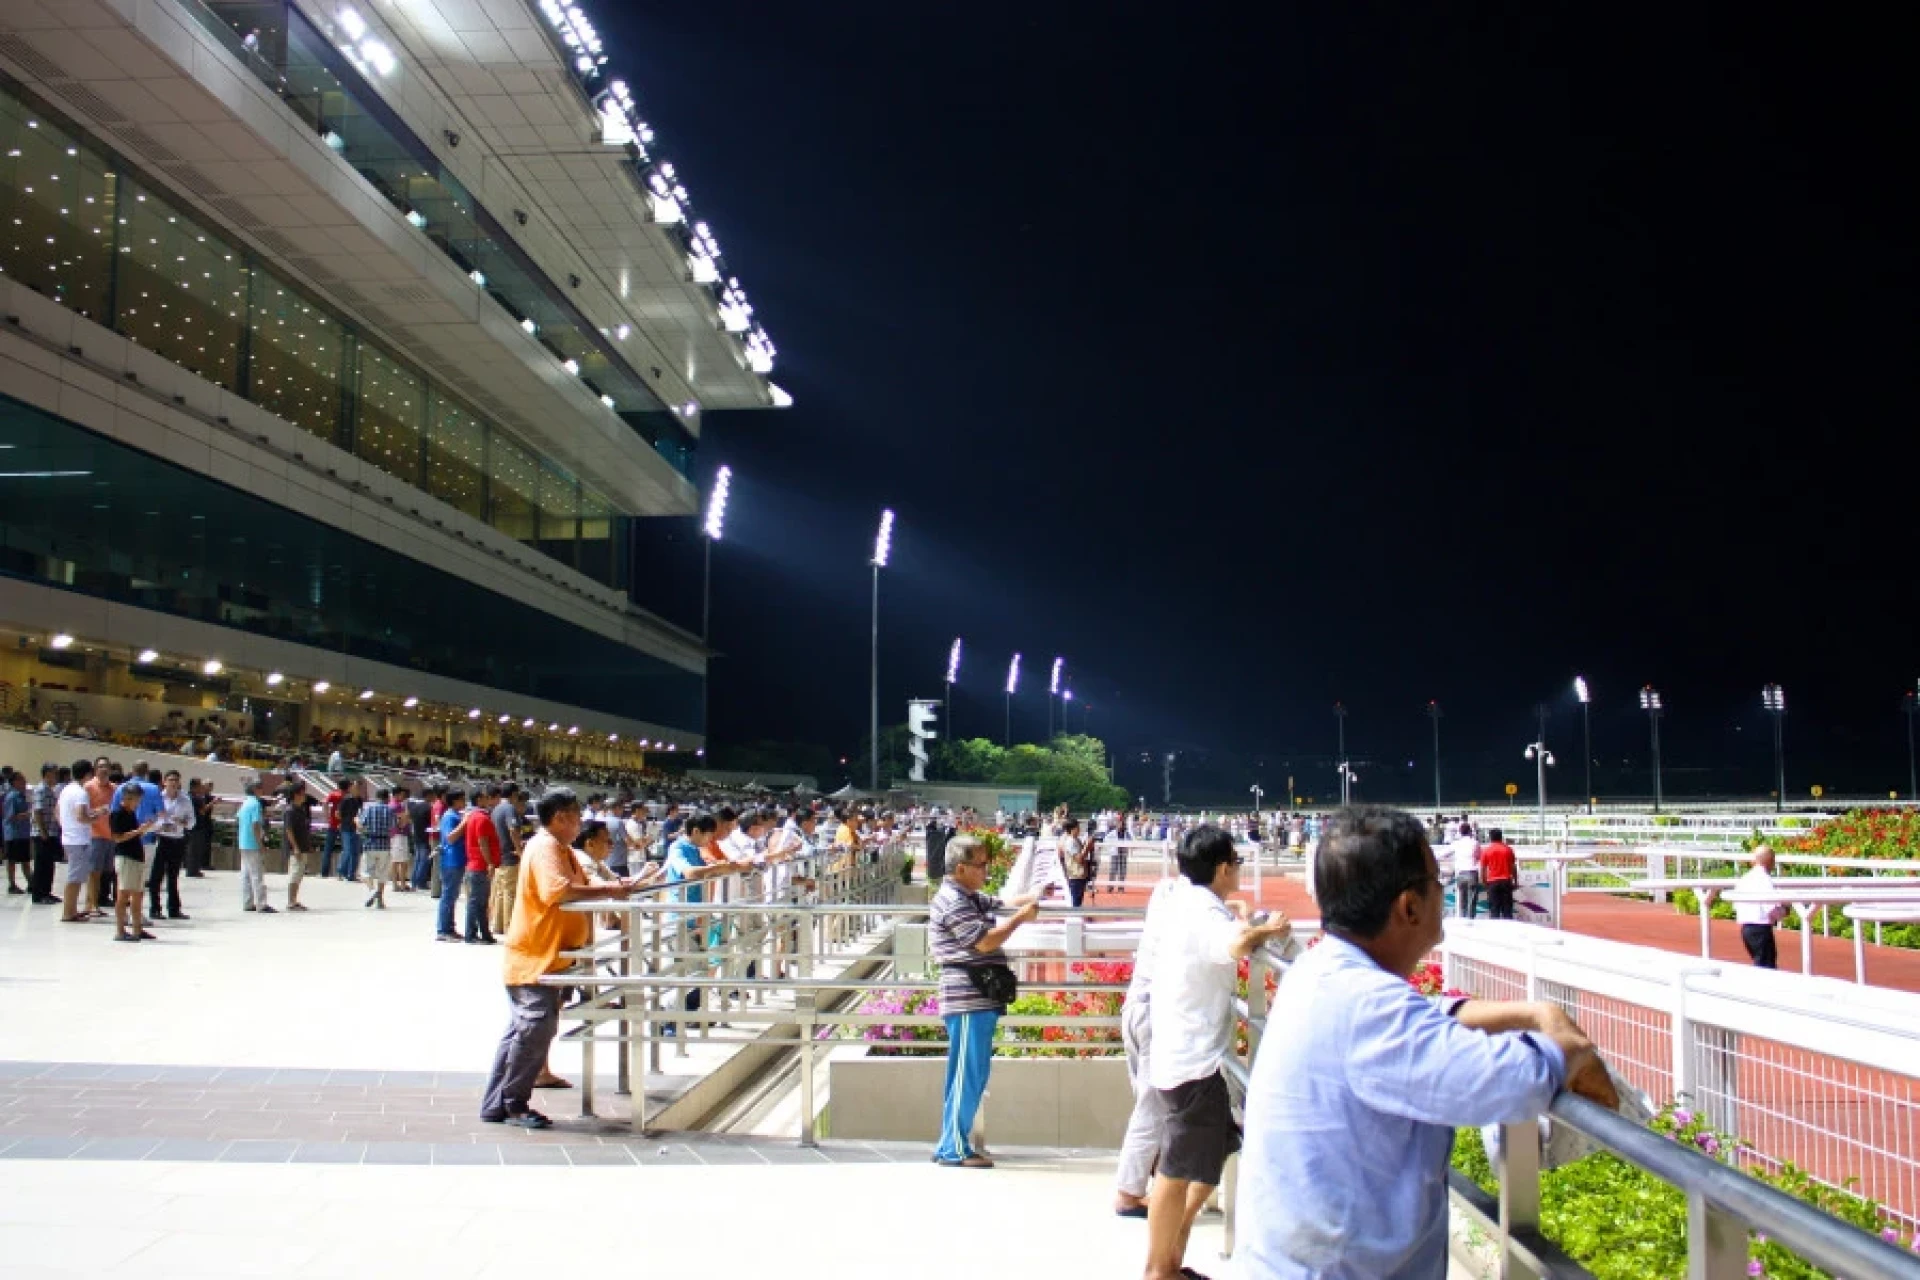 Singapore Racecourse (Kranji Racecourse)